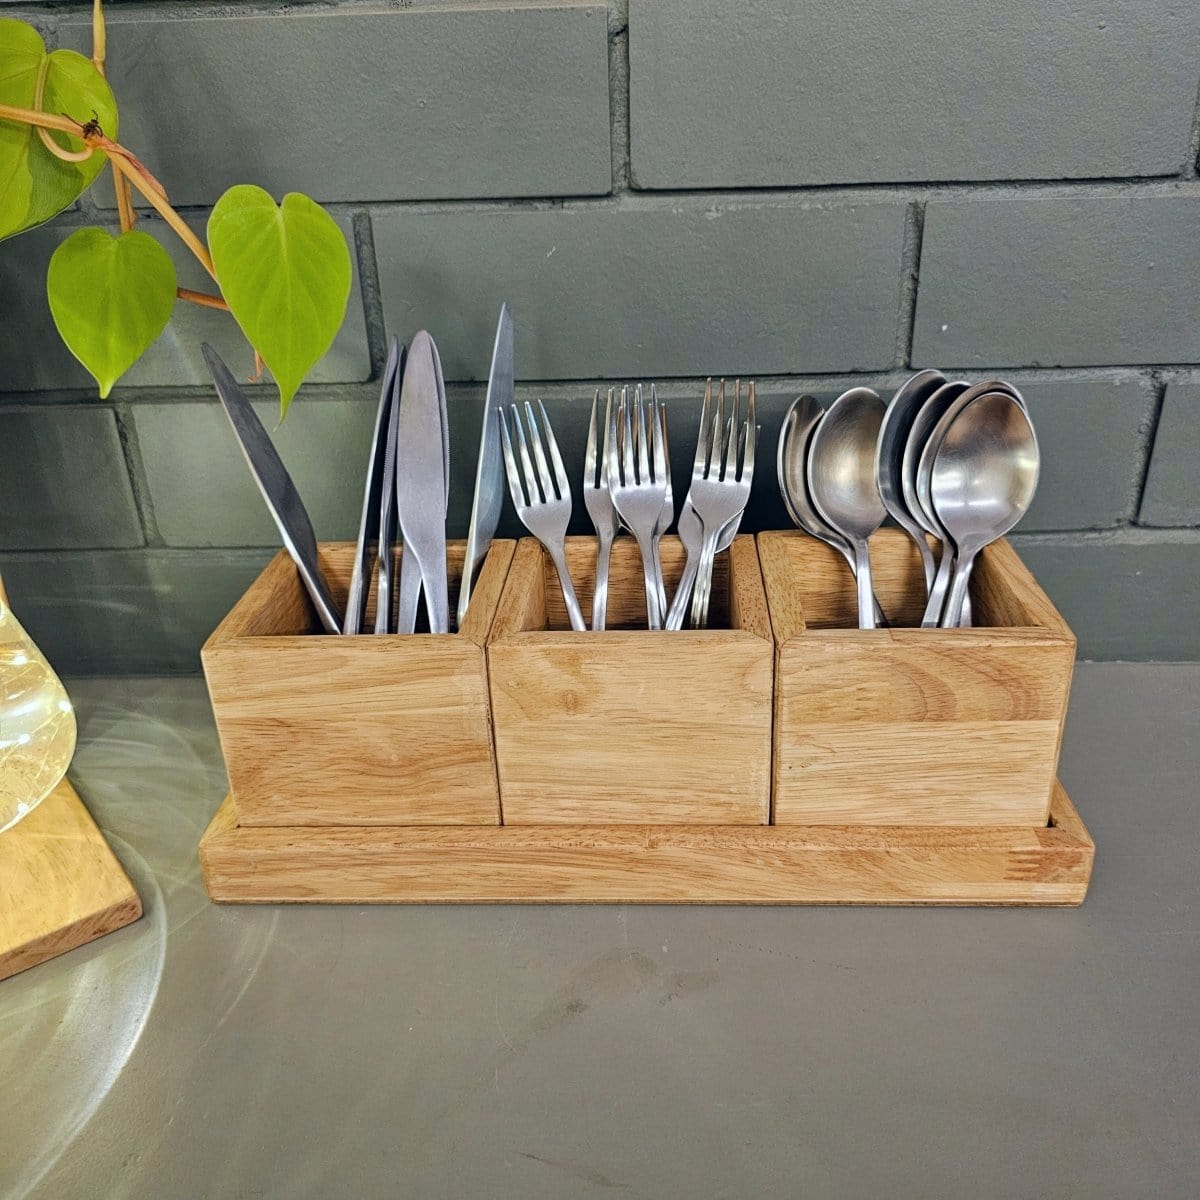 Barish Cutlery Holder Basic Best Home Decor Handcrafted